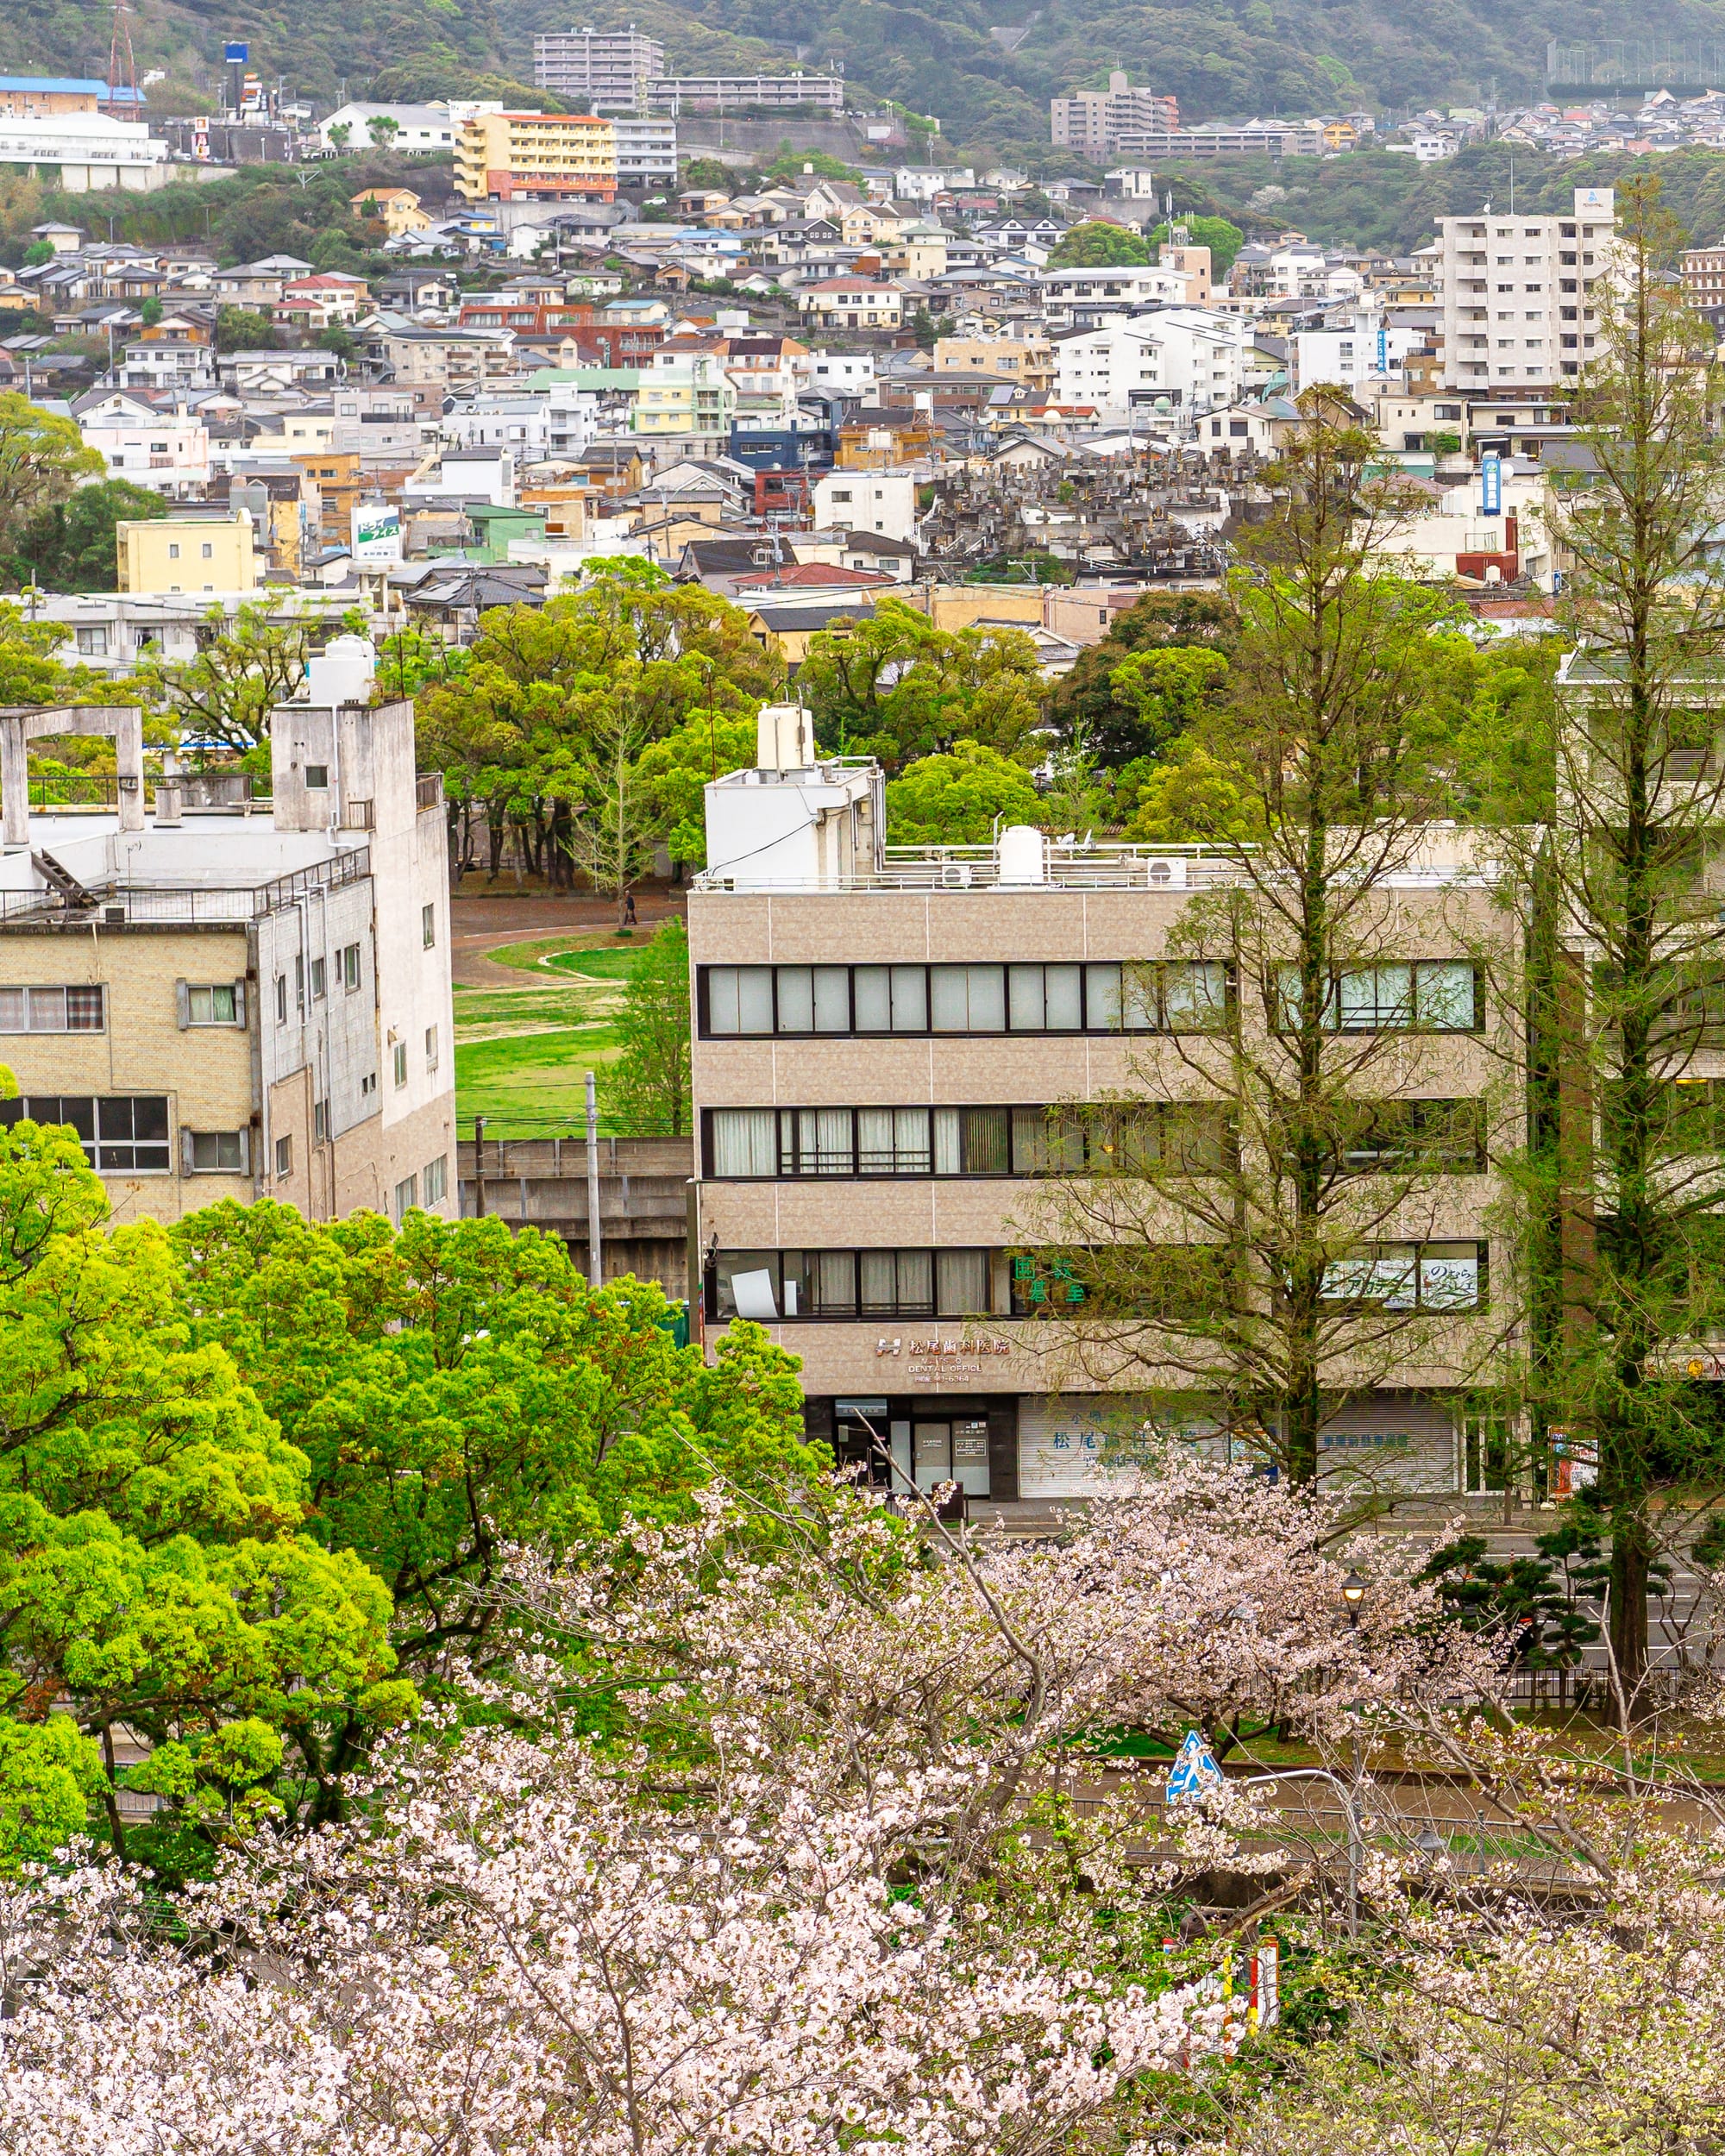 Nagasaki, Japan: Echoes of Resilience